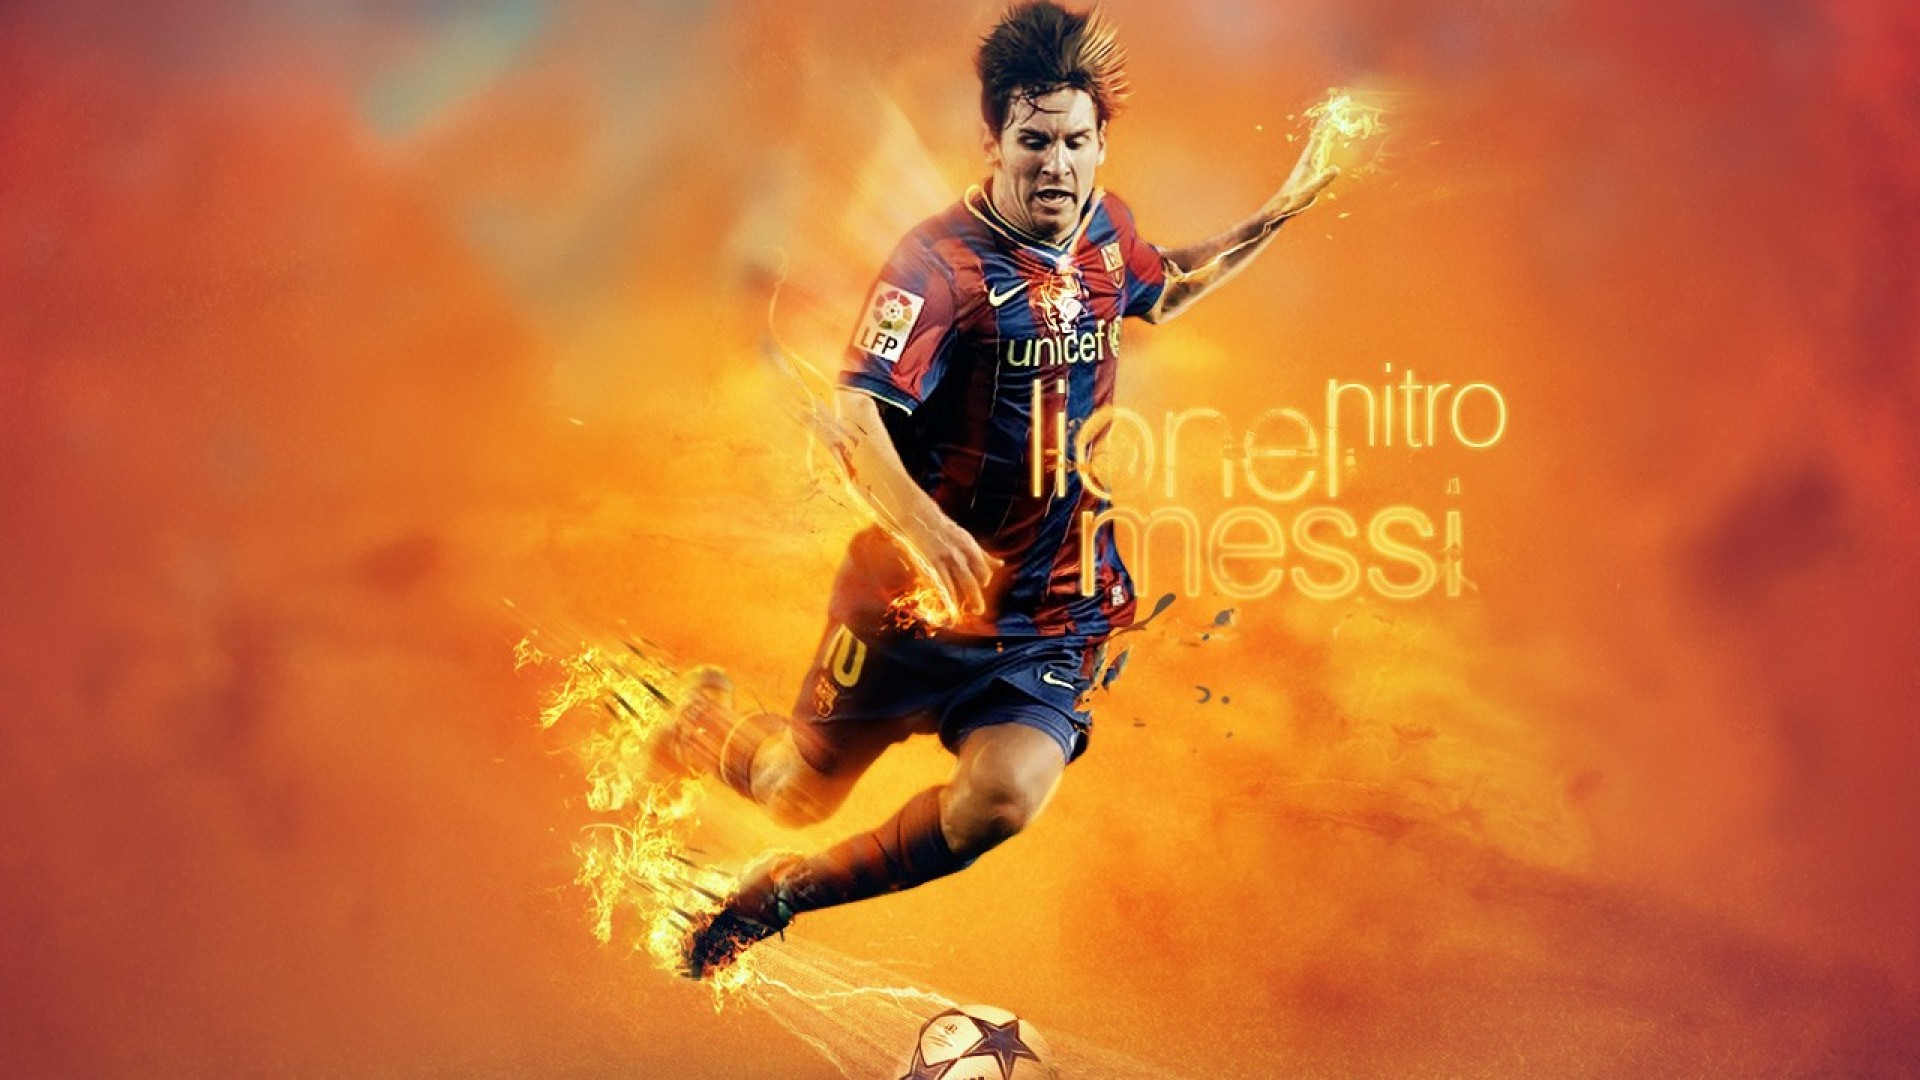 Soccer Lionel Messi Wallpaper - Lionel Messi Wallpaper Hd 1080p - HD Wallpaper 